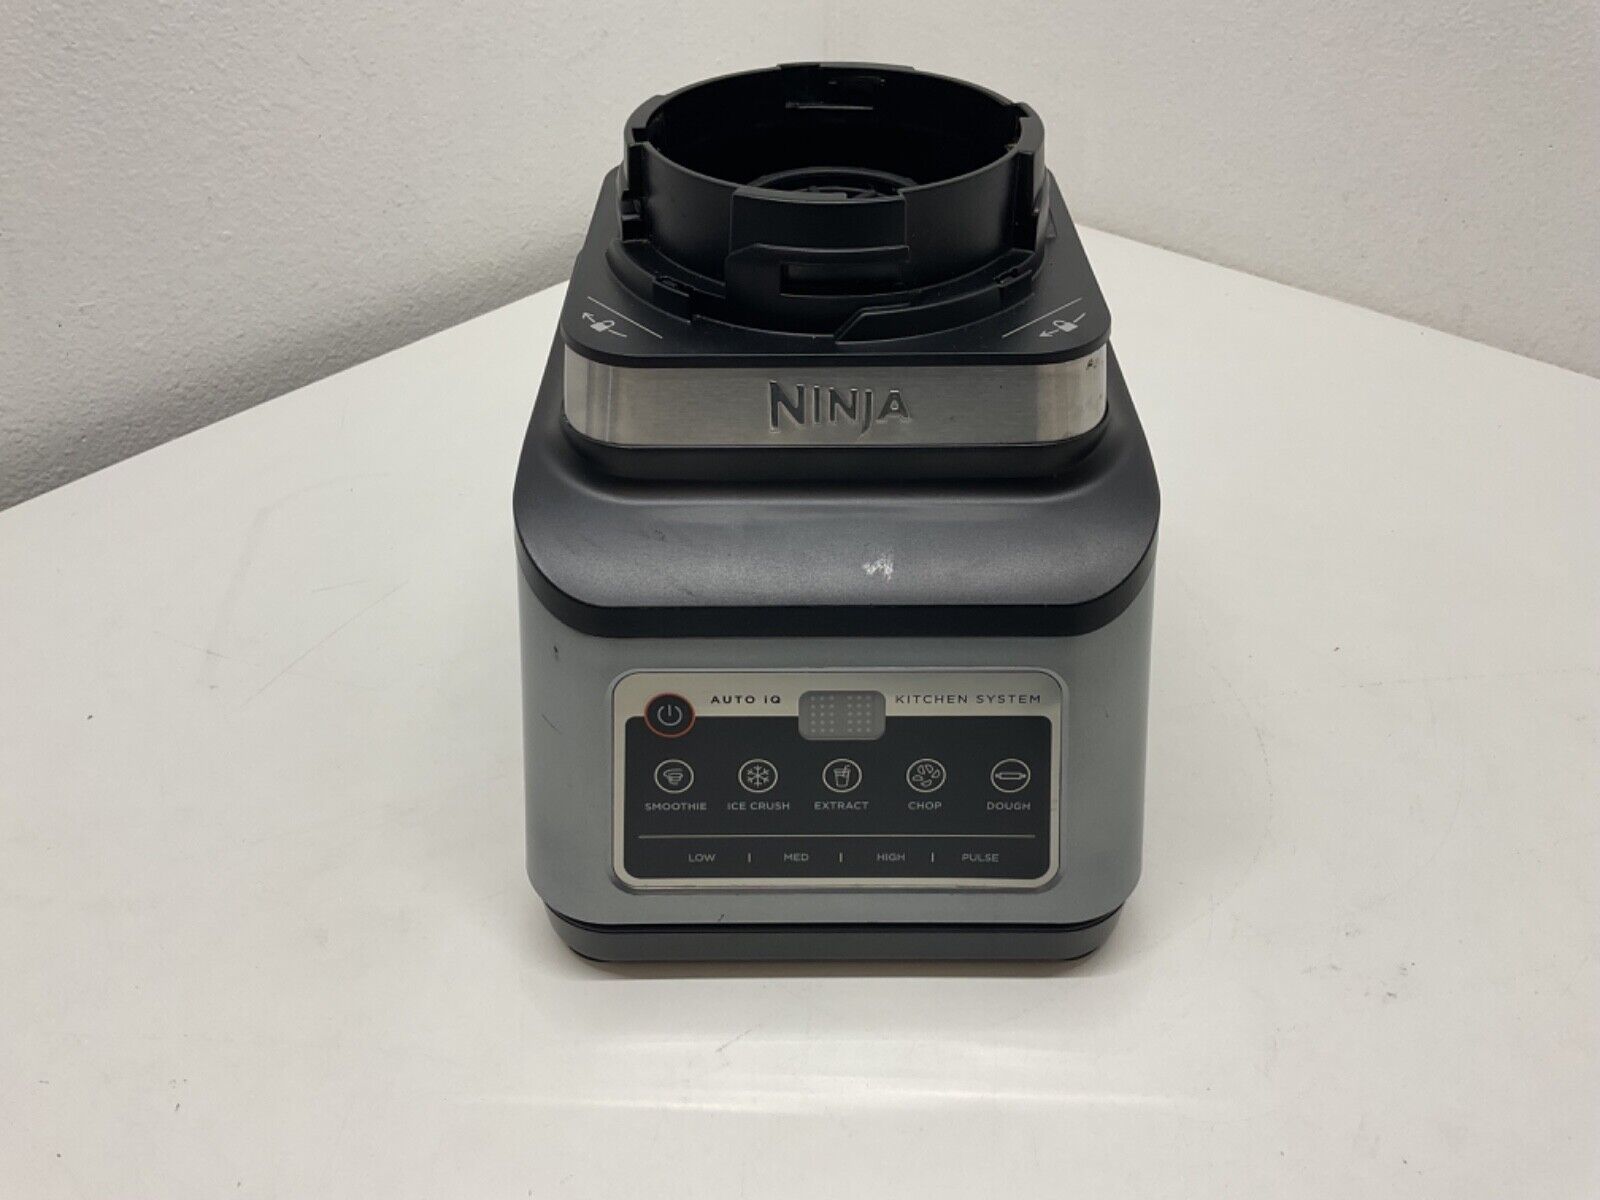 24OZ Replacement Cups Compatible for Ninja Nutri BN401, BN701, SS101,  BN400, BN800, BN801 Blender